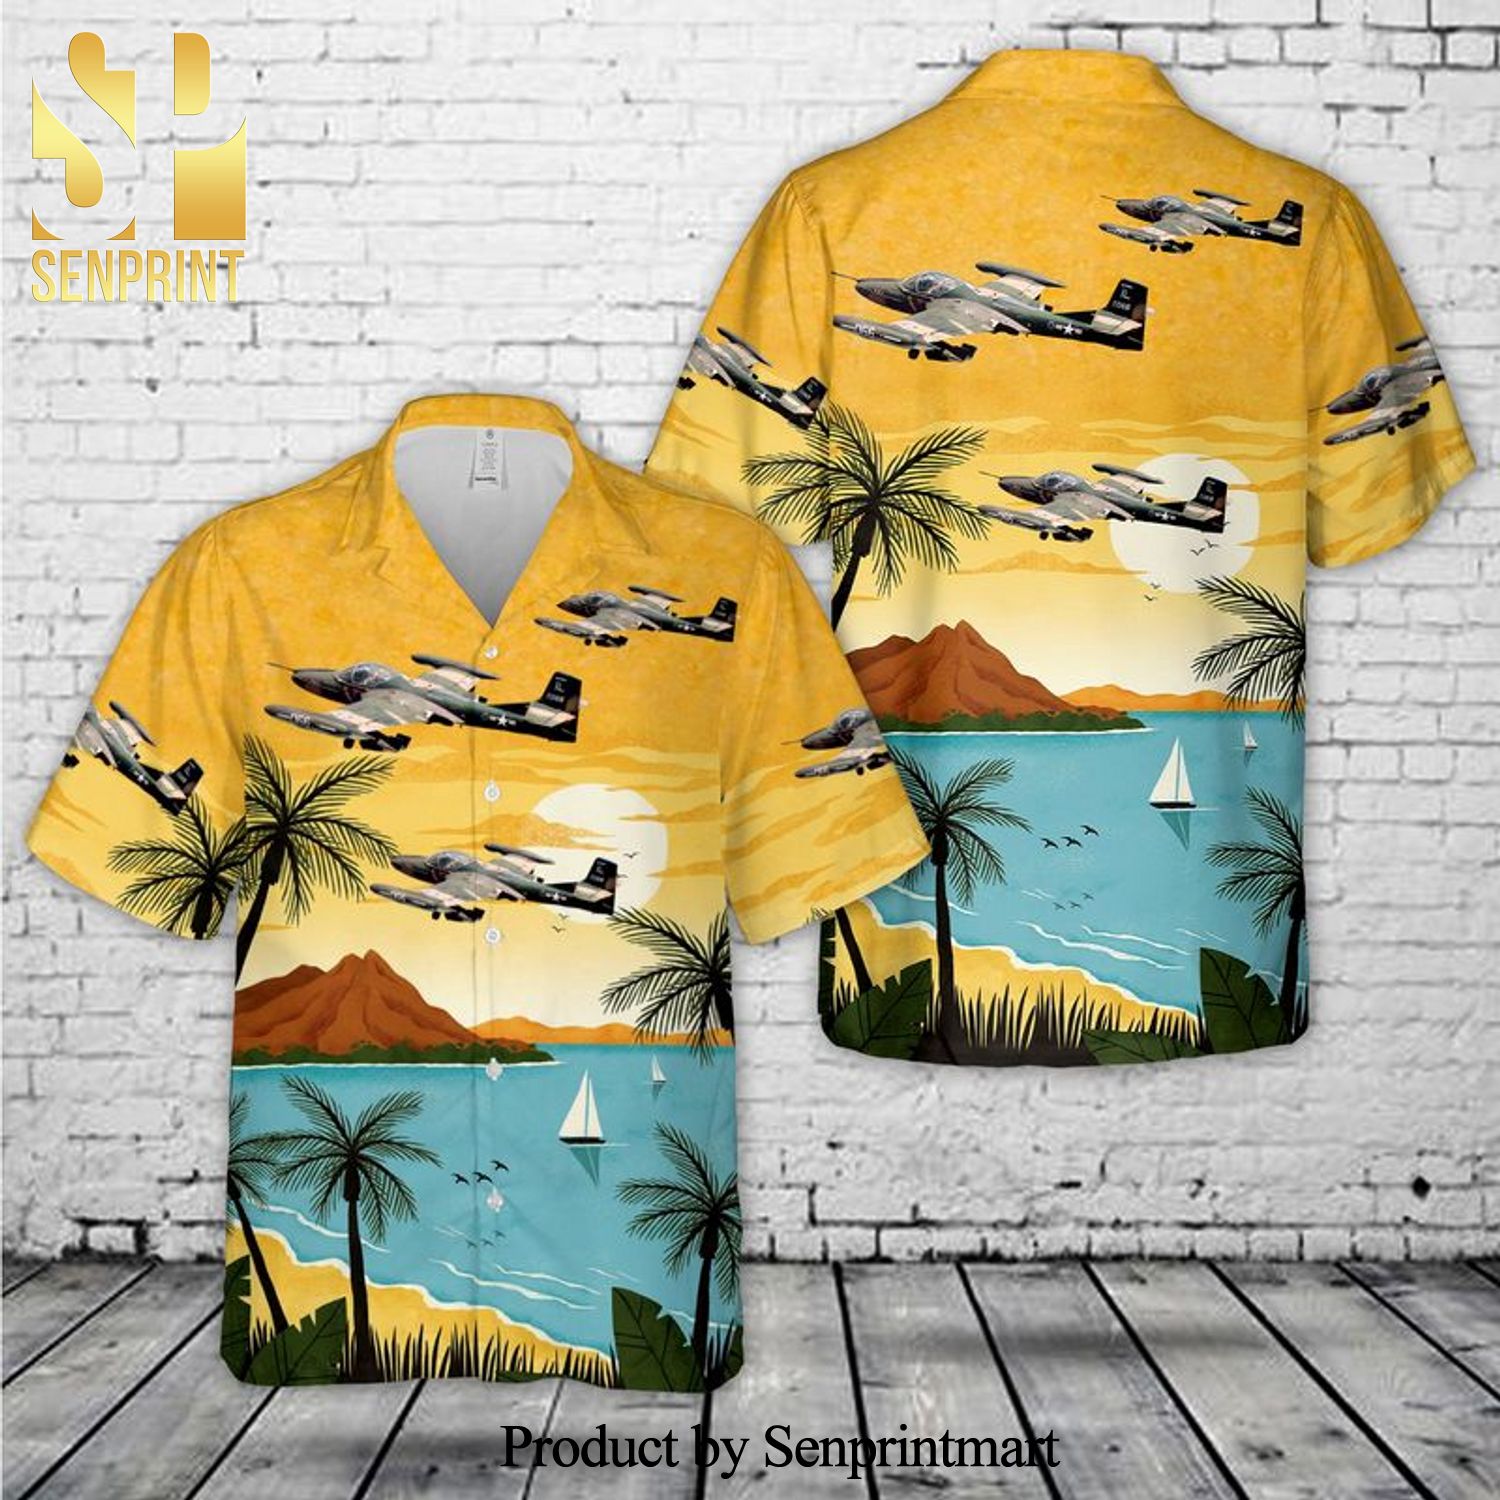 Illinois Air National Guard 169th Tactical Air Support Squadron OA-37B Dragonfly aircraft All Over Print Hawaiian Shirt